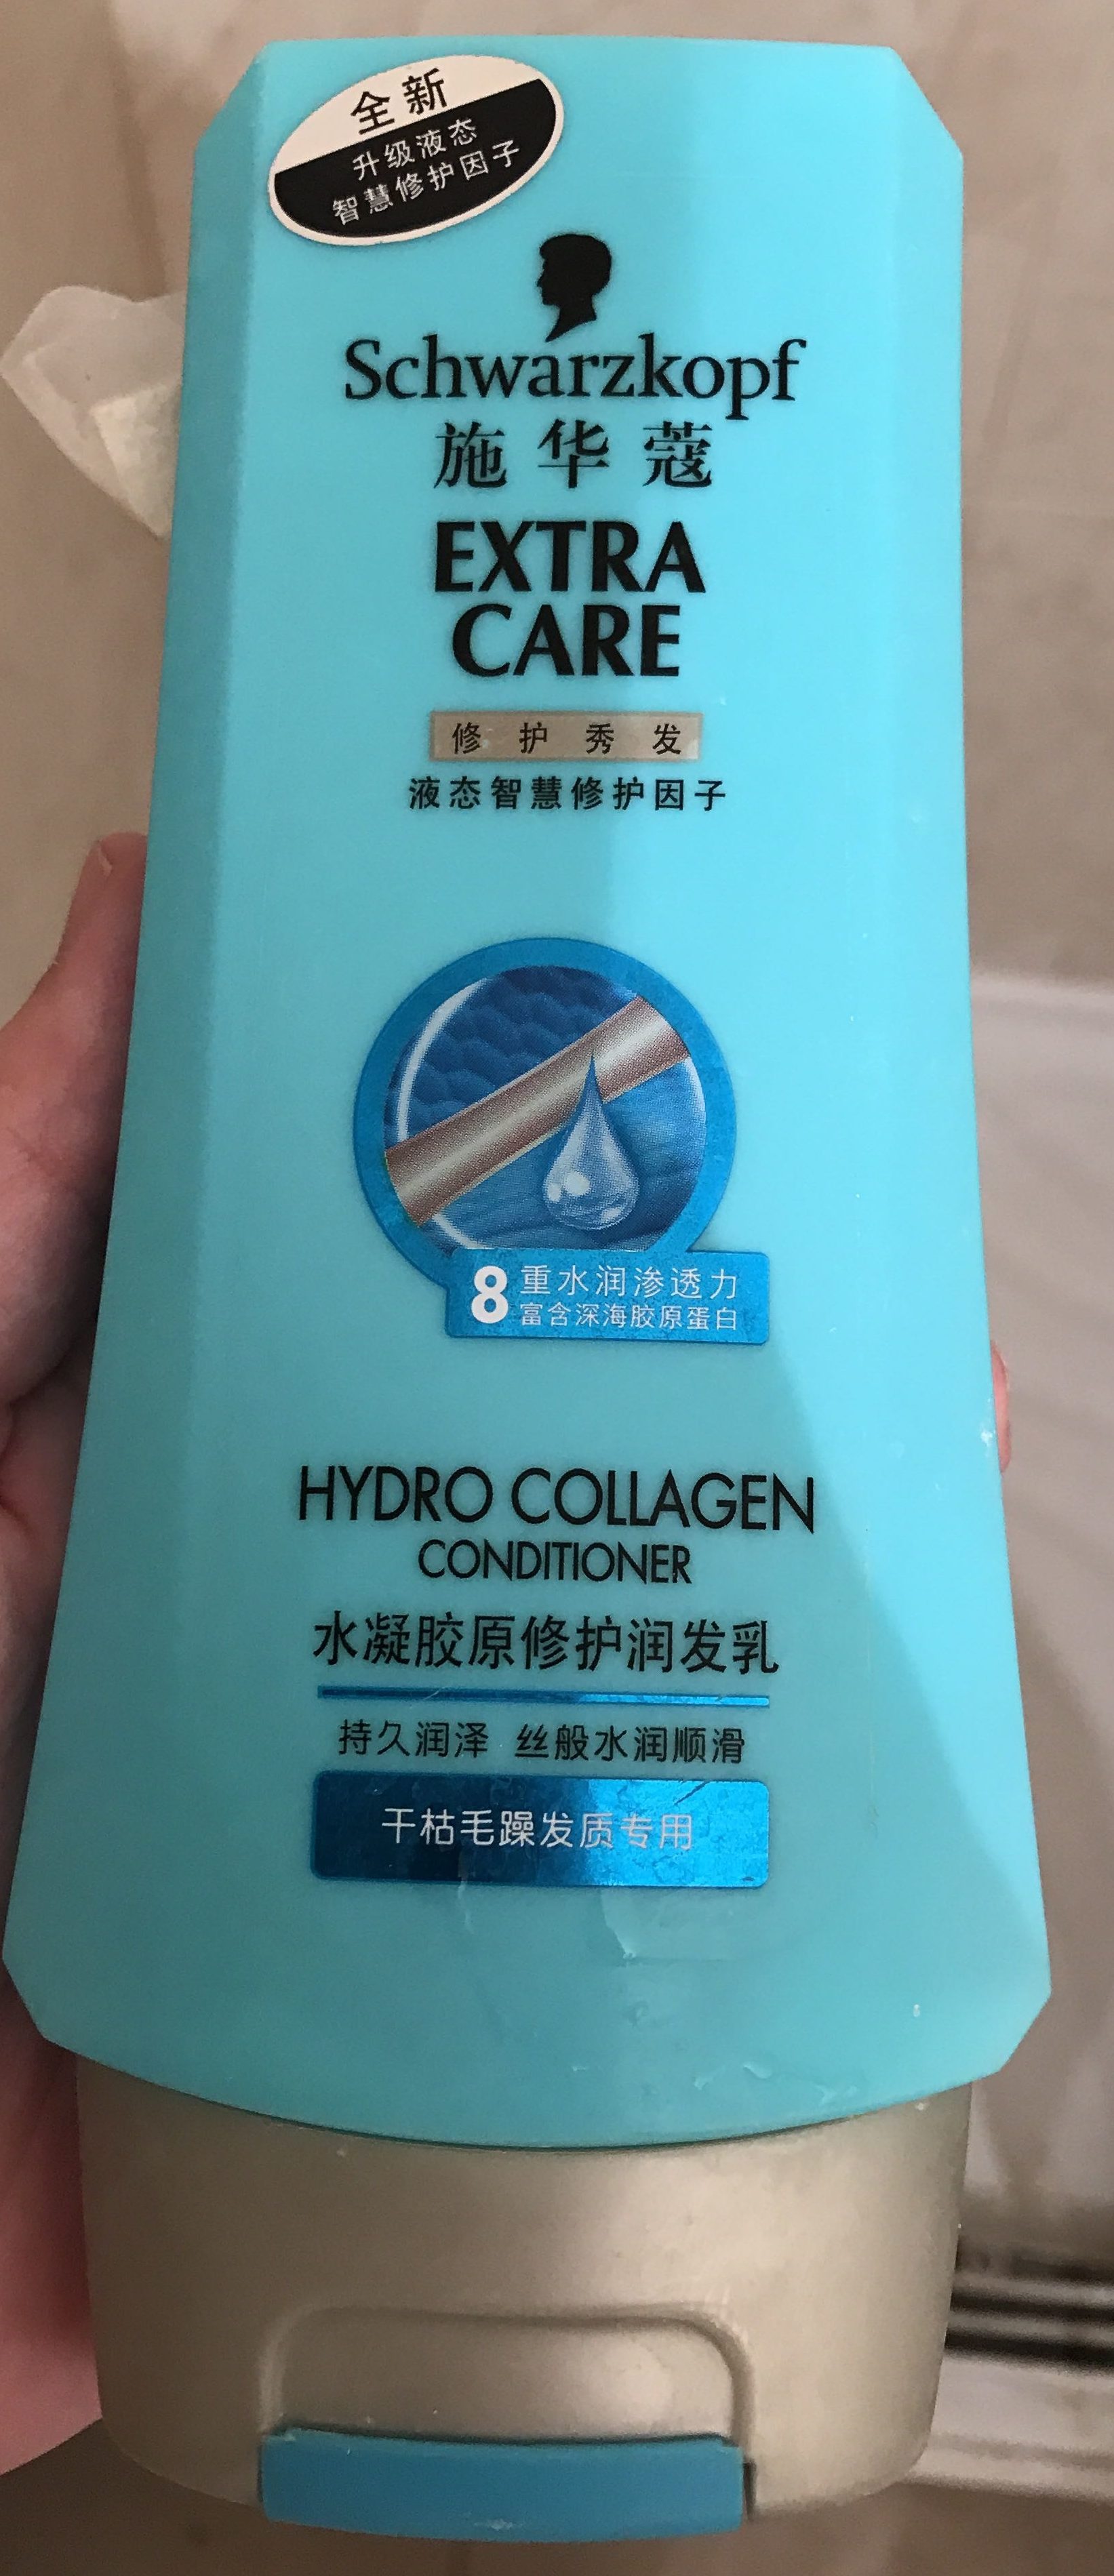 Extra Care 修护润发 Hydro Collagen Conditioner - מוצר - zh